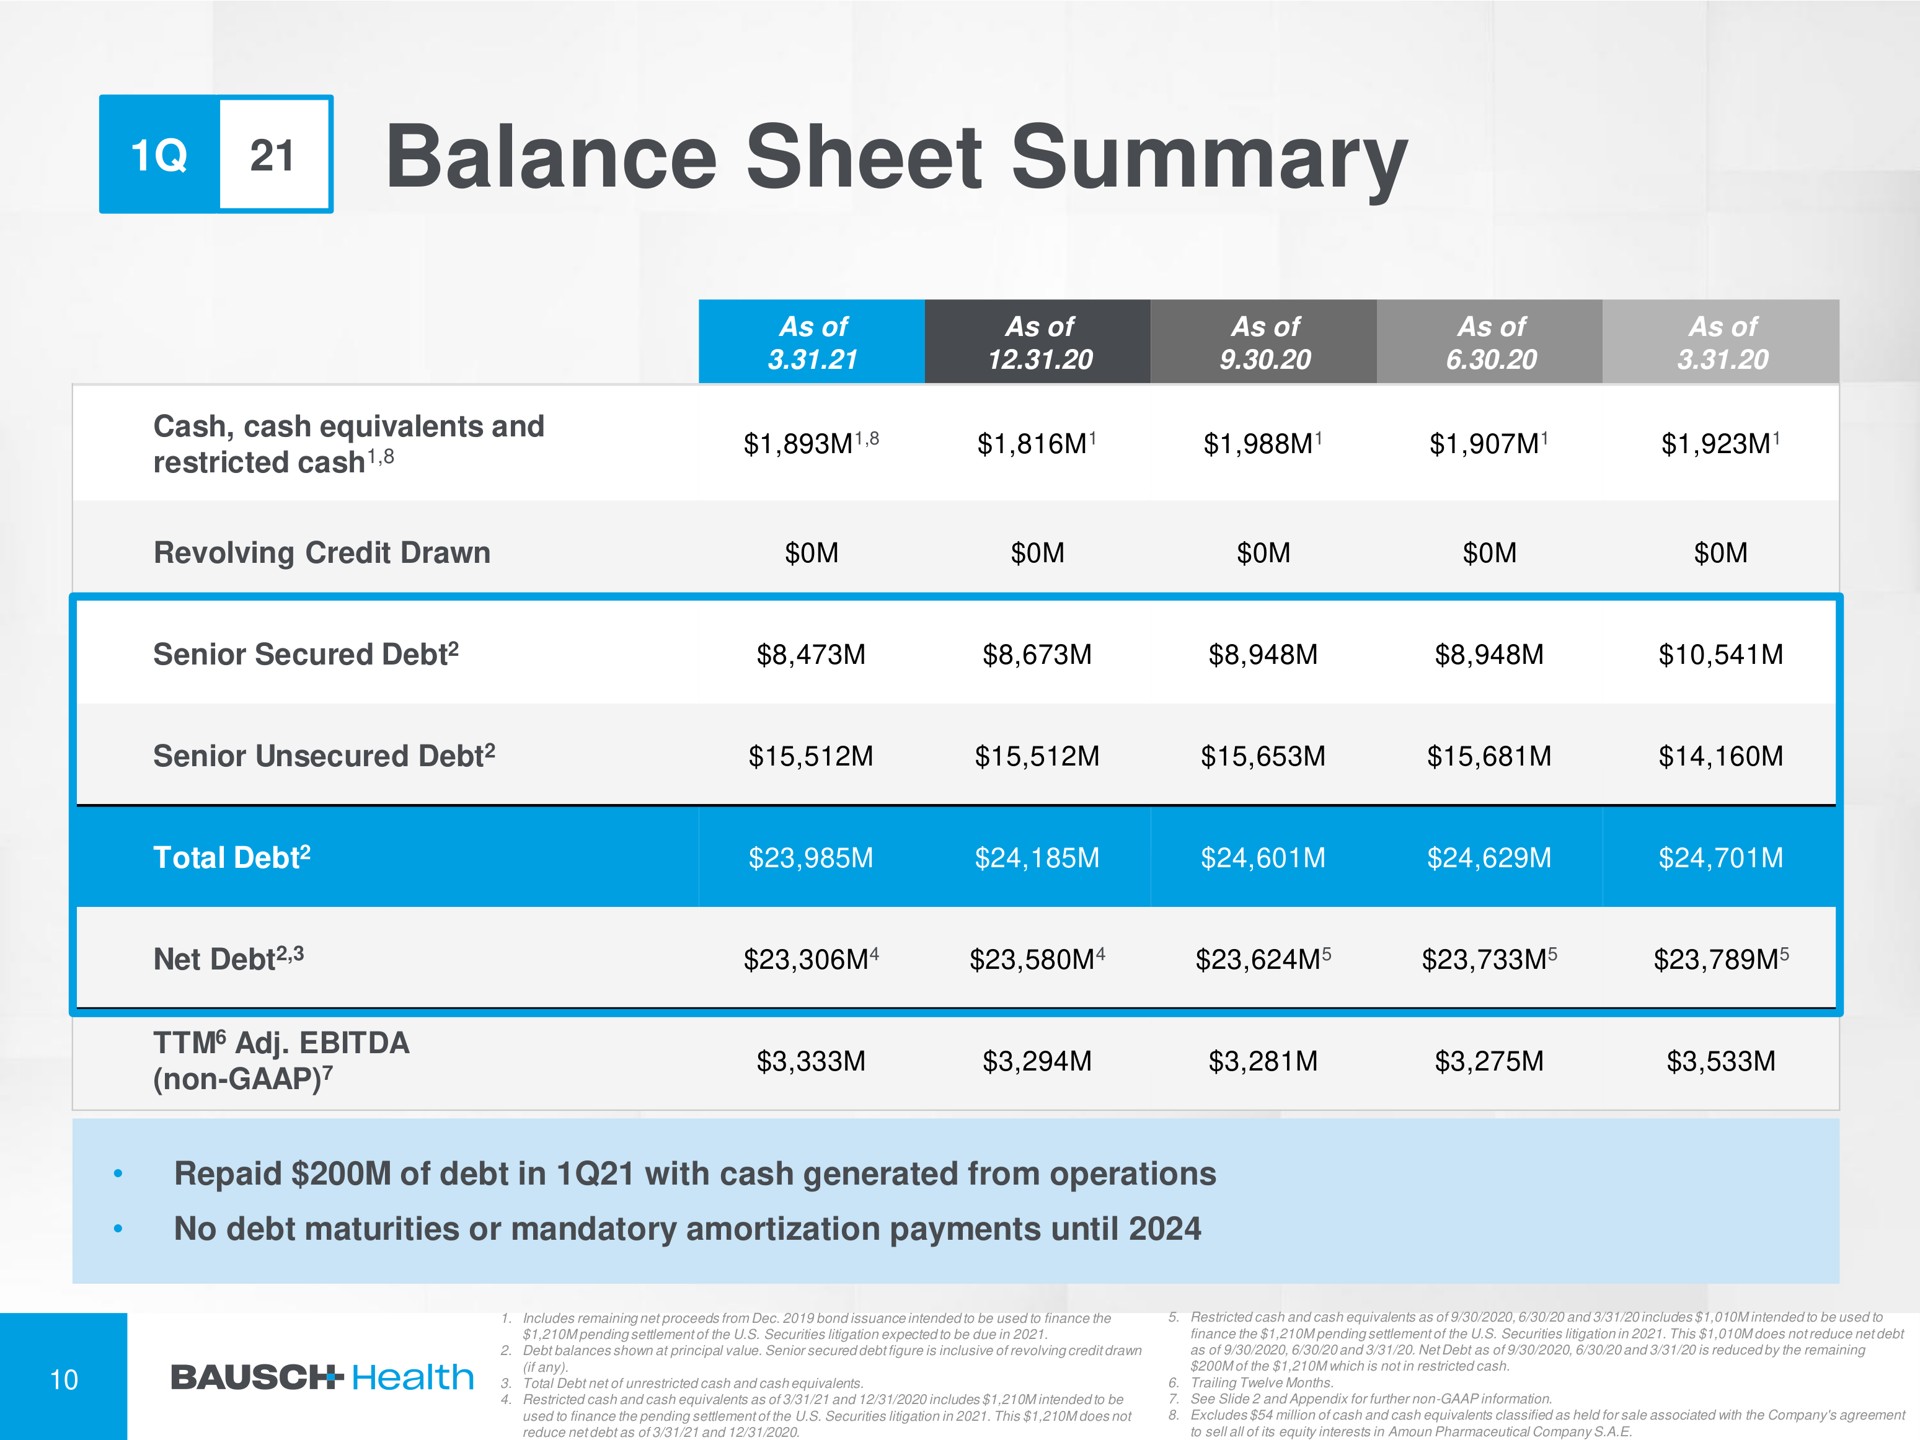 balance sheet summary by | Bausch Health Companies